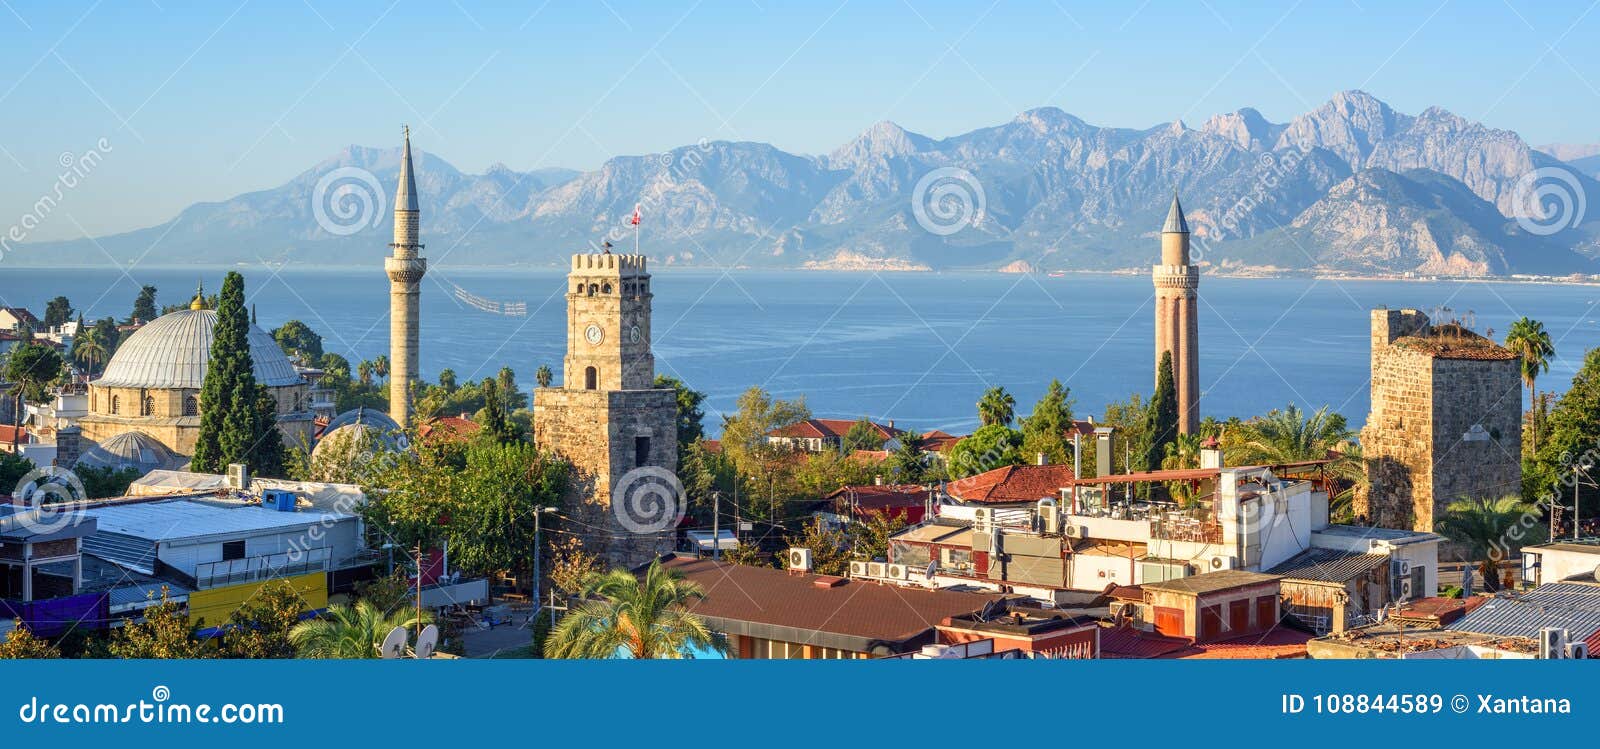 panoramic view of antalya old town, turkey